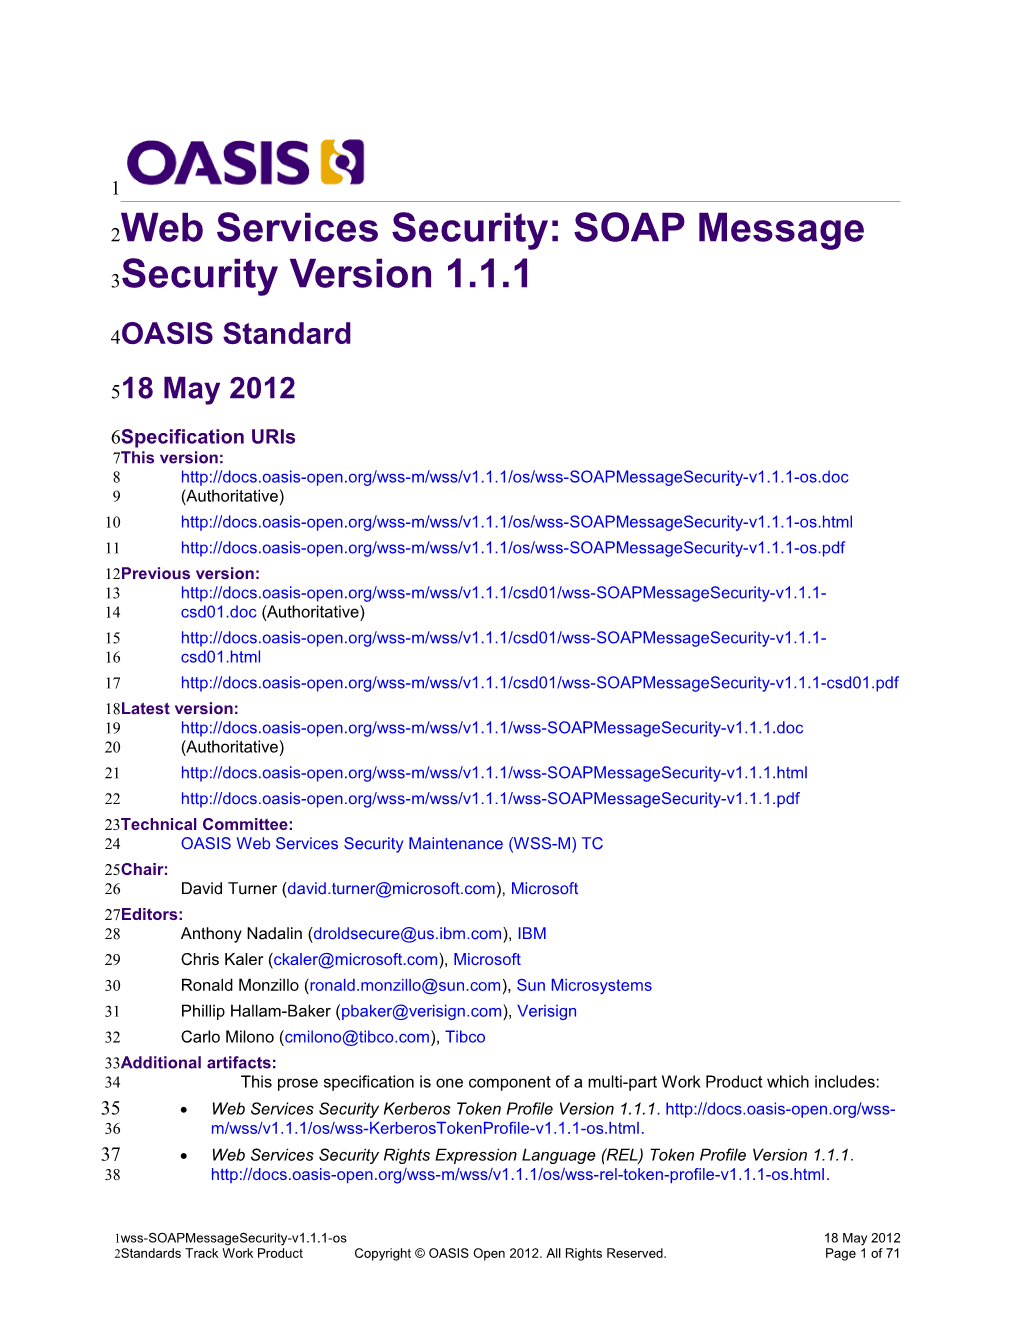 Web Services Security: SOAP Message Security Version 1.1.1